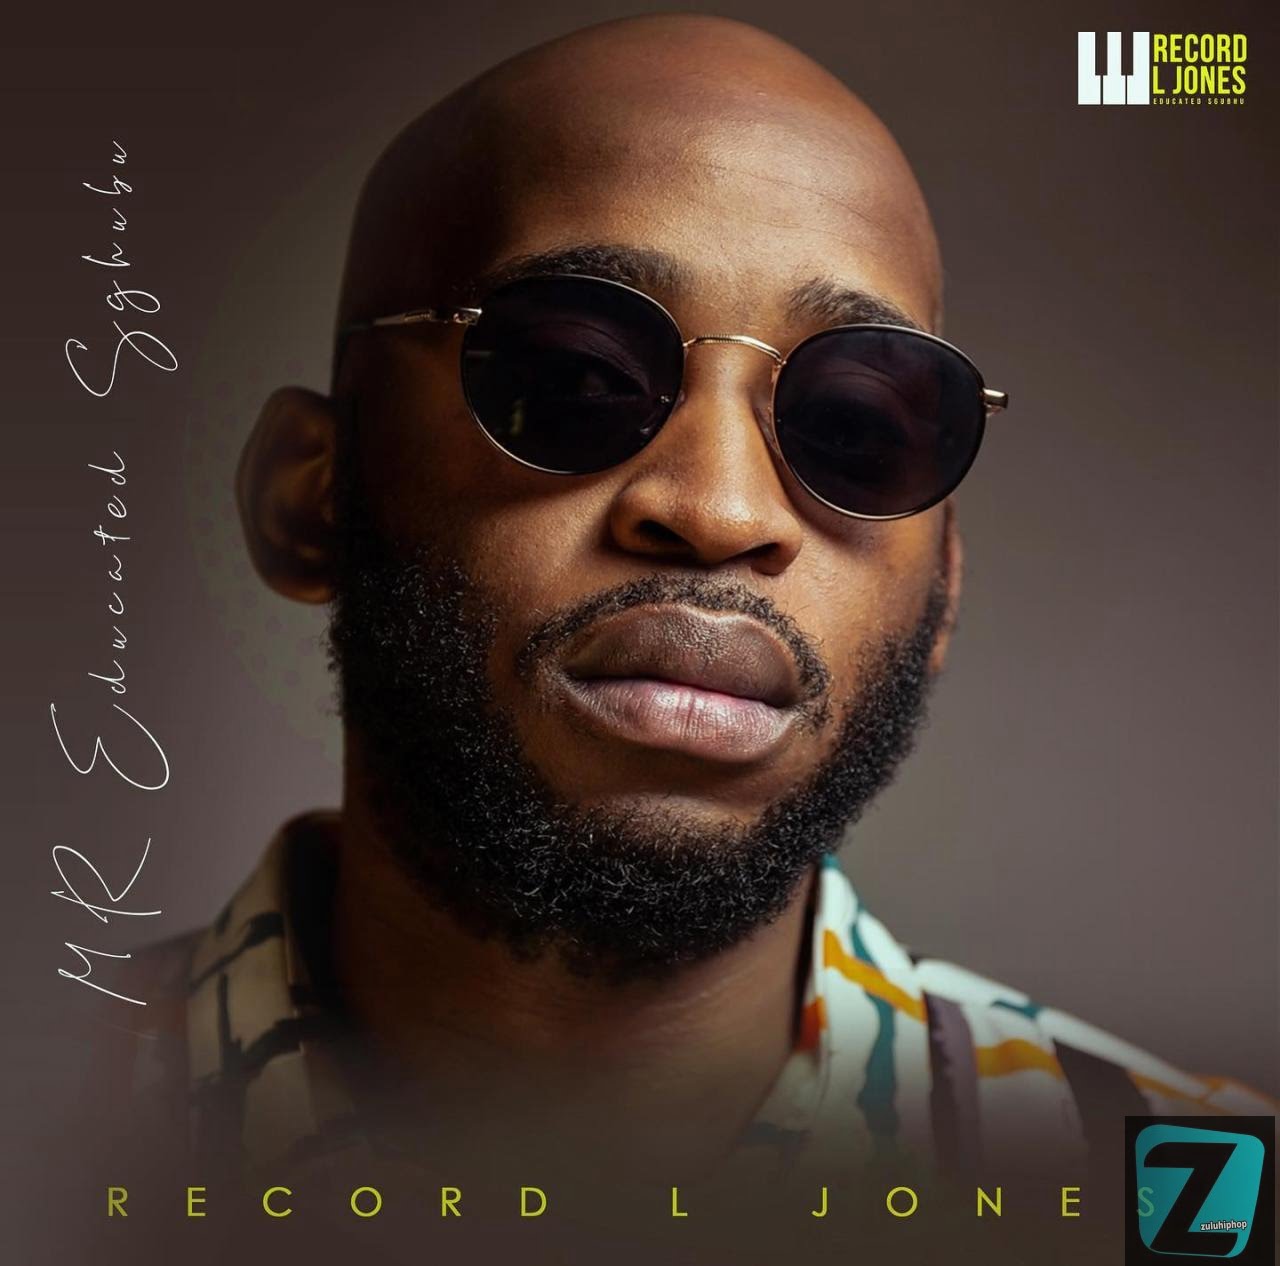 Record L Jones – Soulful Sessions Mix